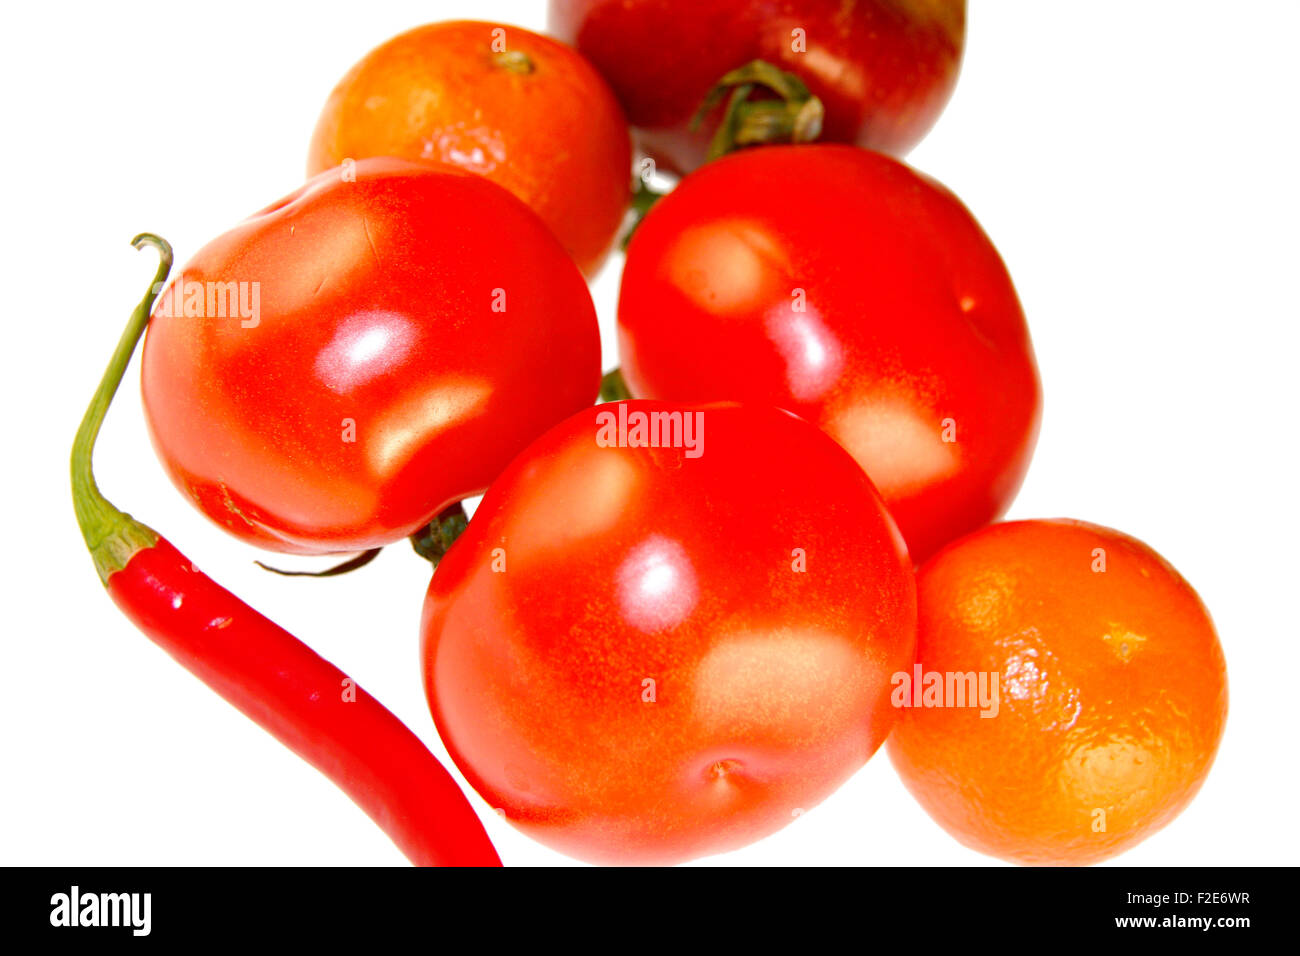 Obst / Gemuese: Rote Chillyschote, Tomaten, Mandarinen - Symbolbild Nahrungsmittel. Stockfoto